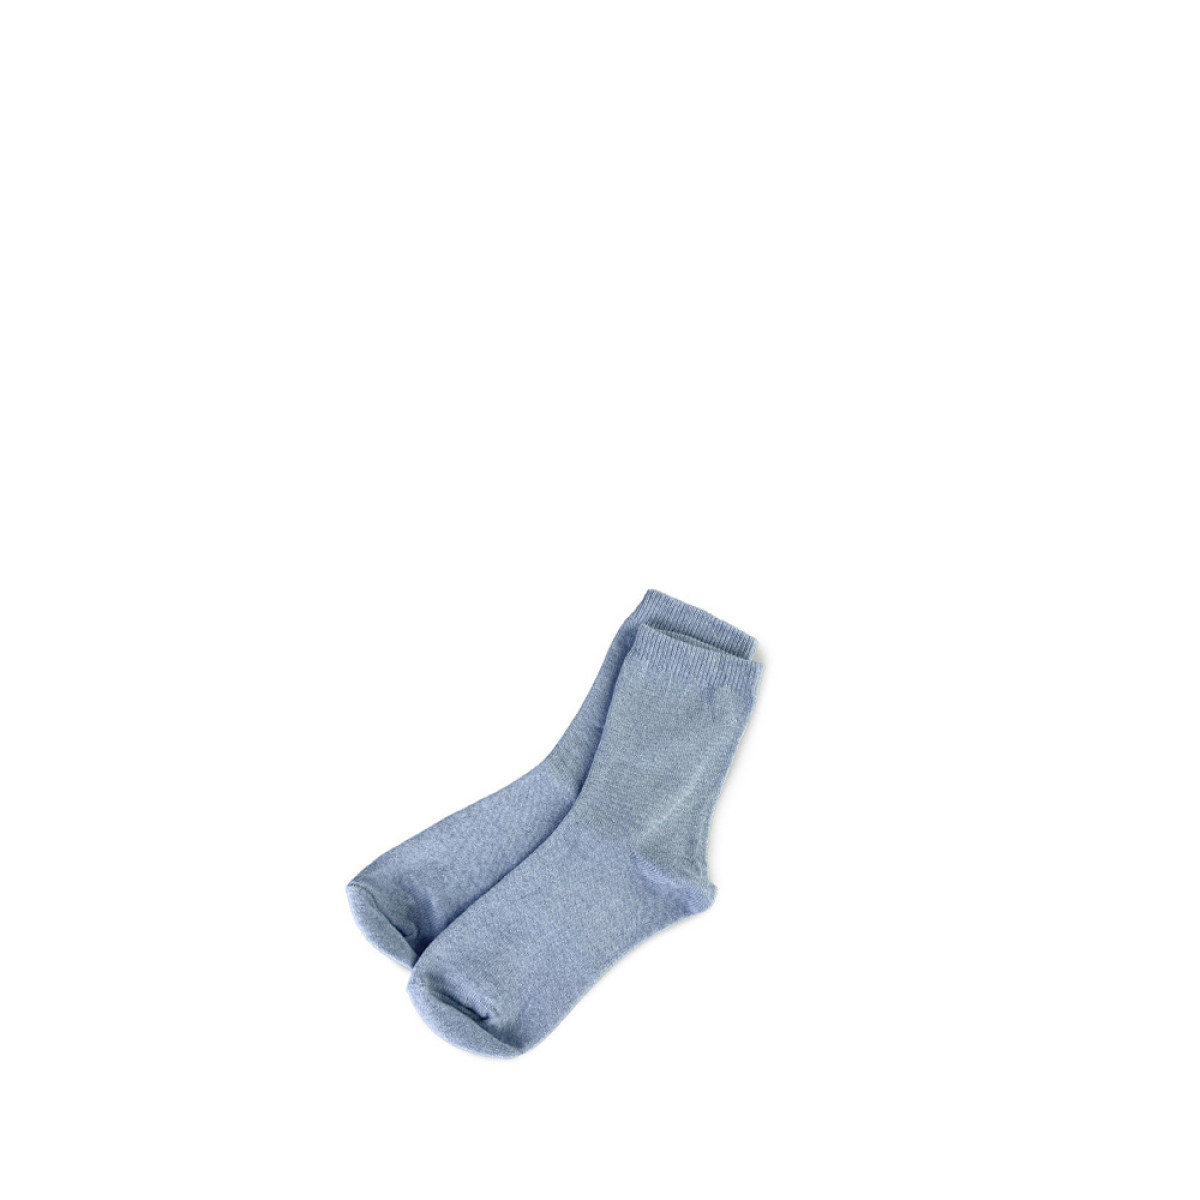 Colorful Kid's Socks, Blue